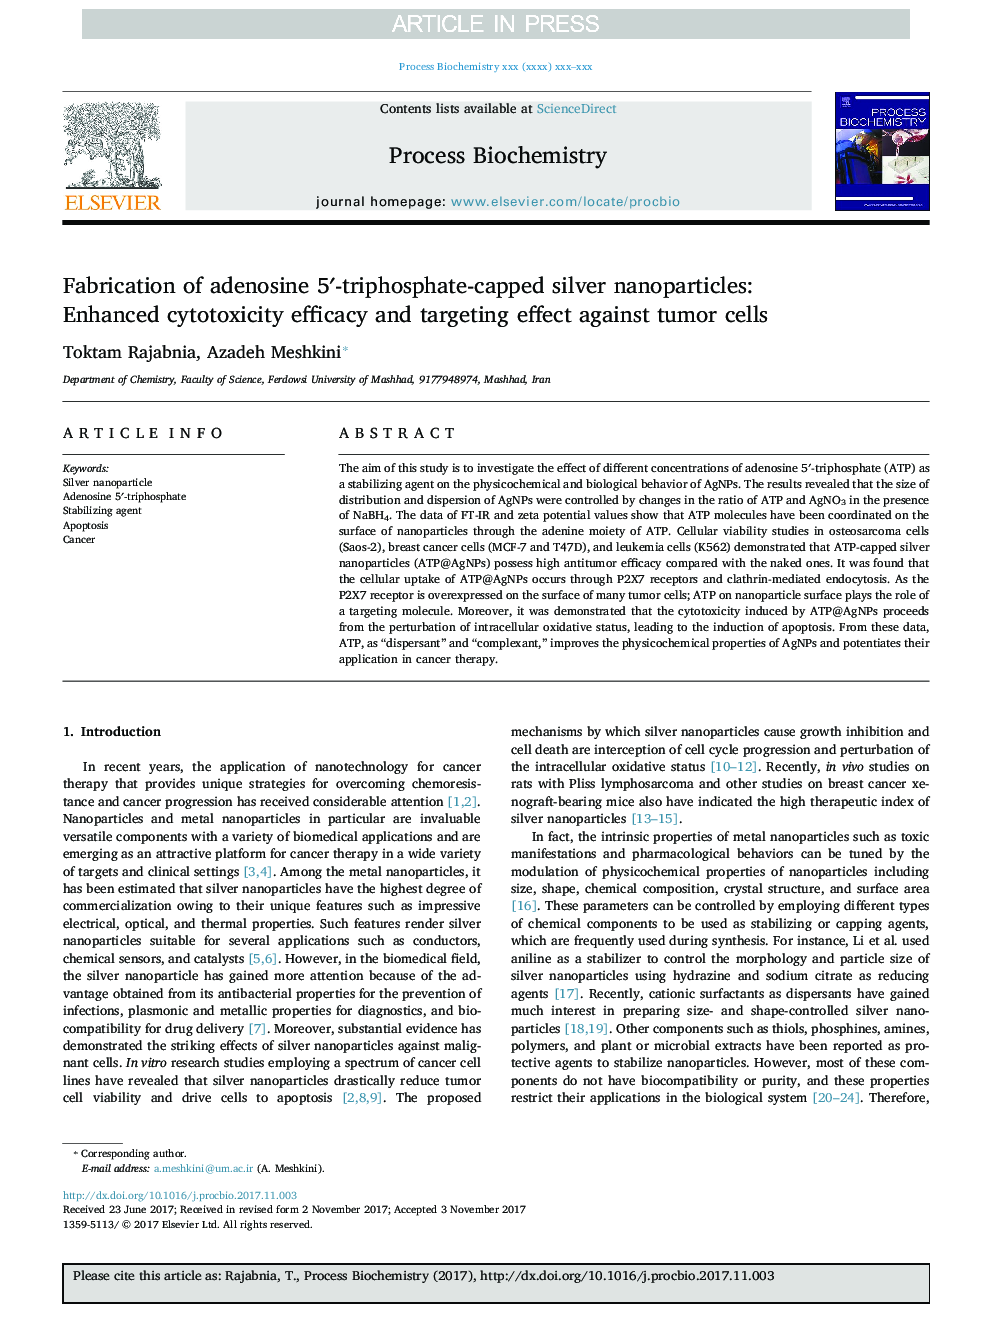 Fabrication of adenosine 5â²-triphosphate-capped silver nanoparticles: Enhanced cytotoxicity efficacy and targeting effect against tumor cells